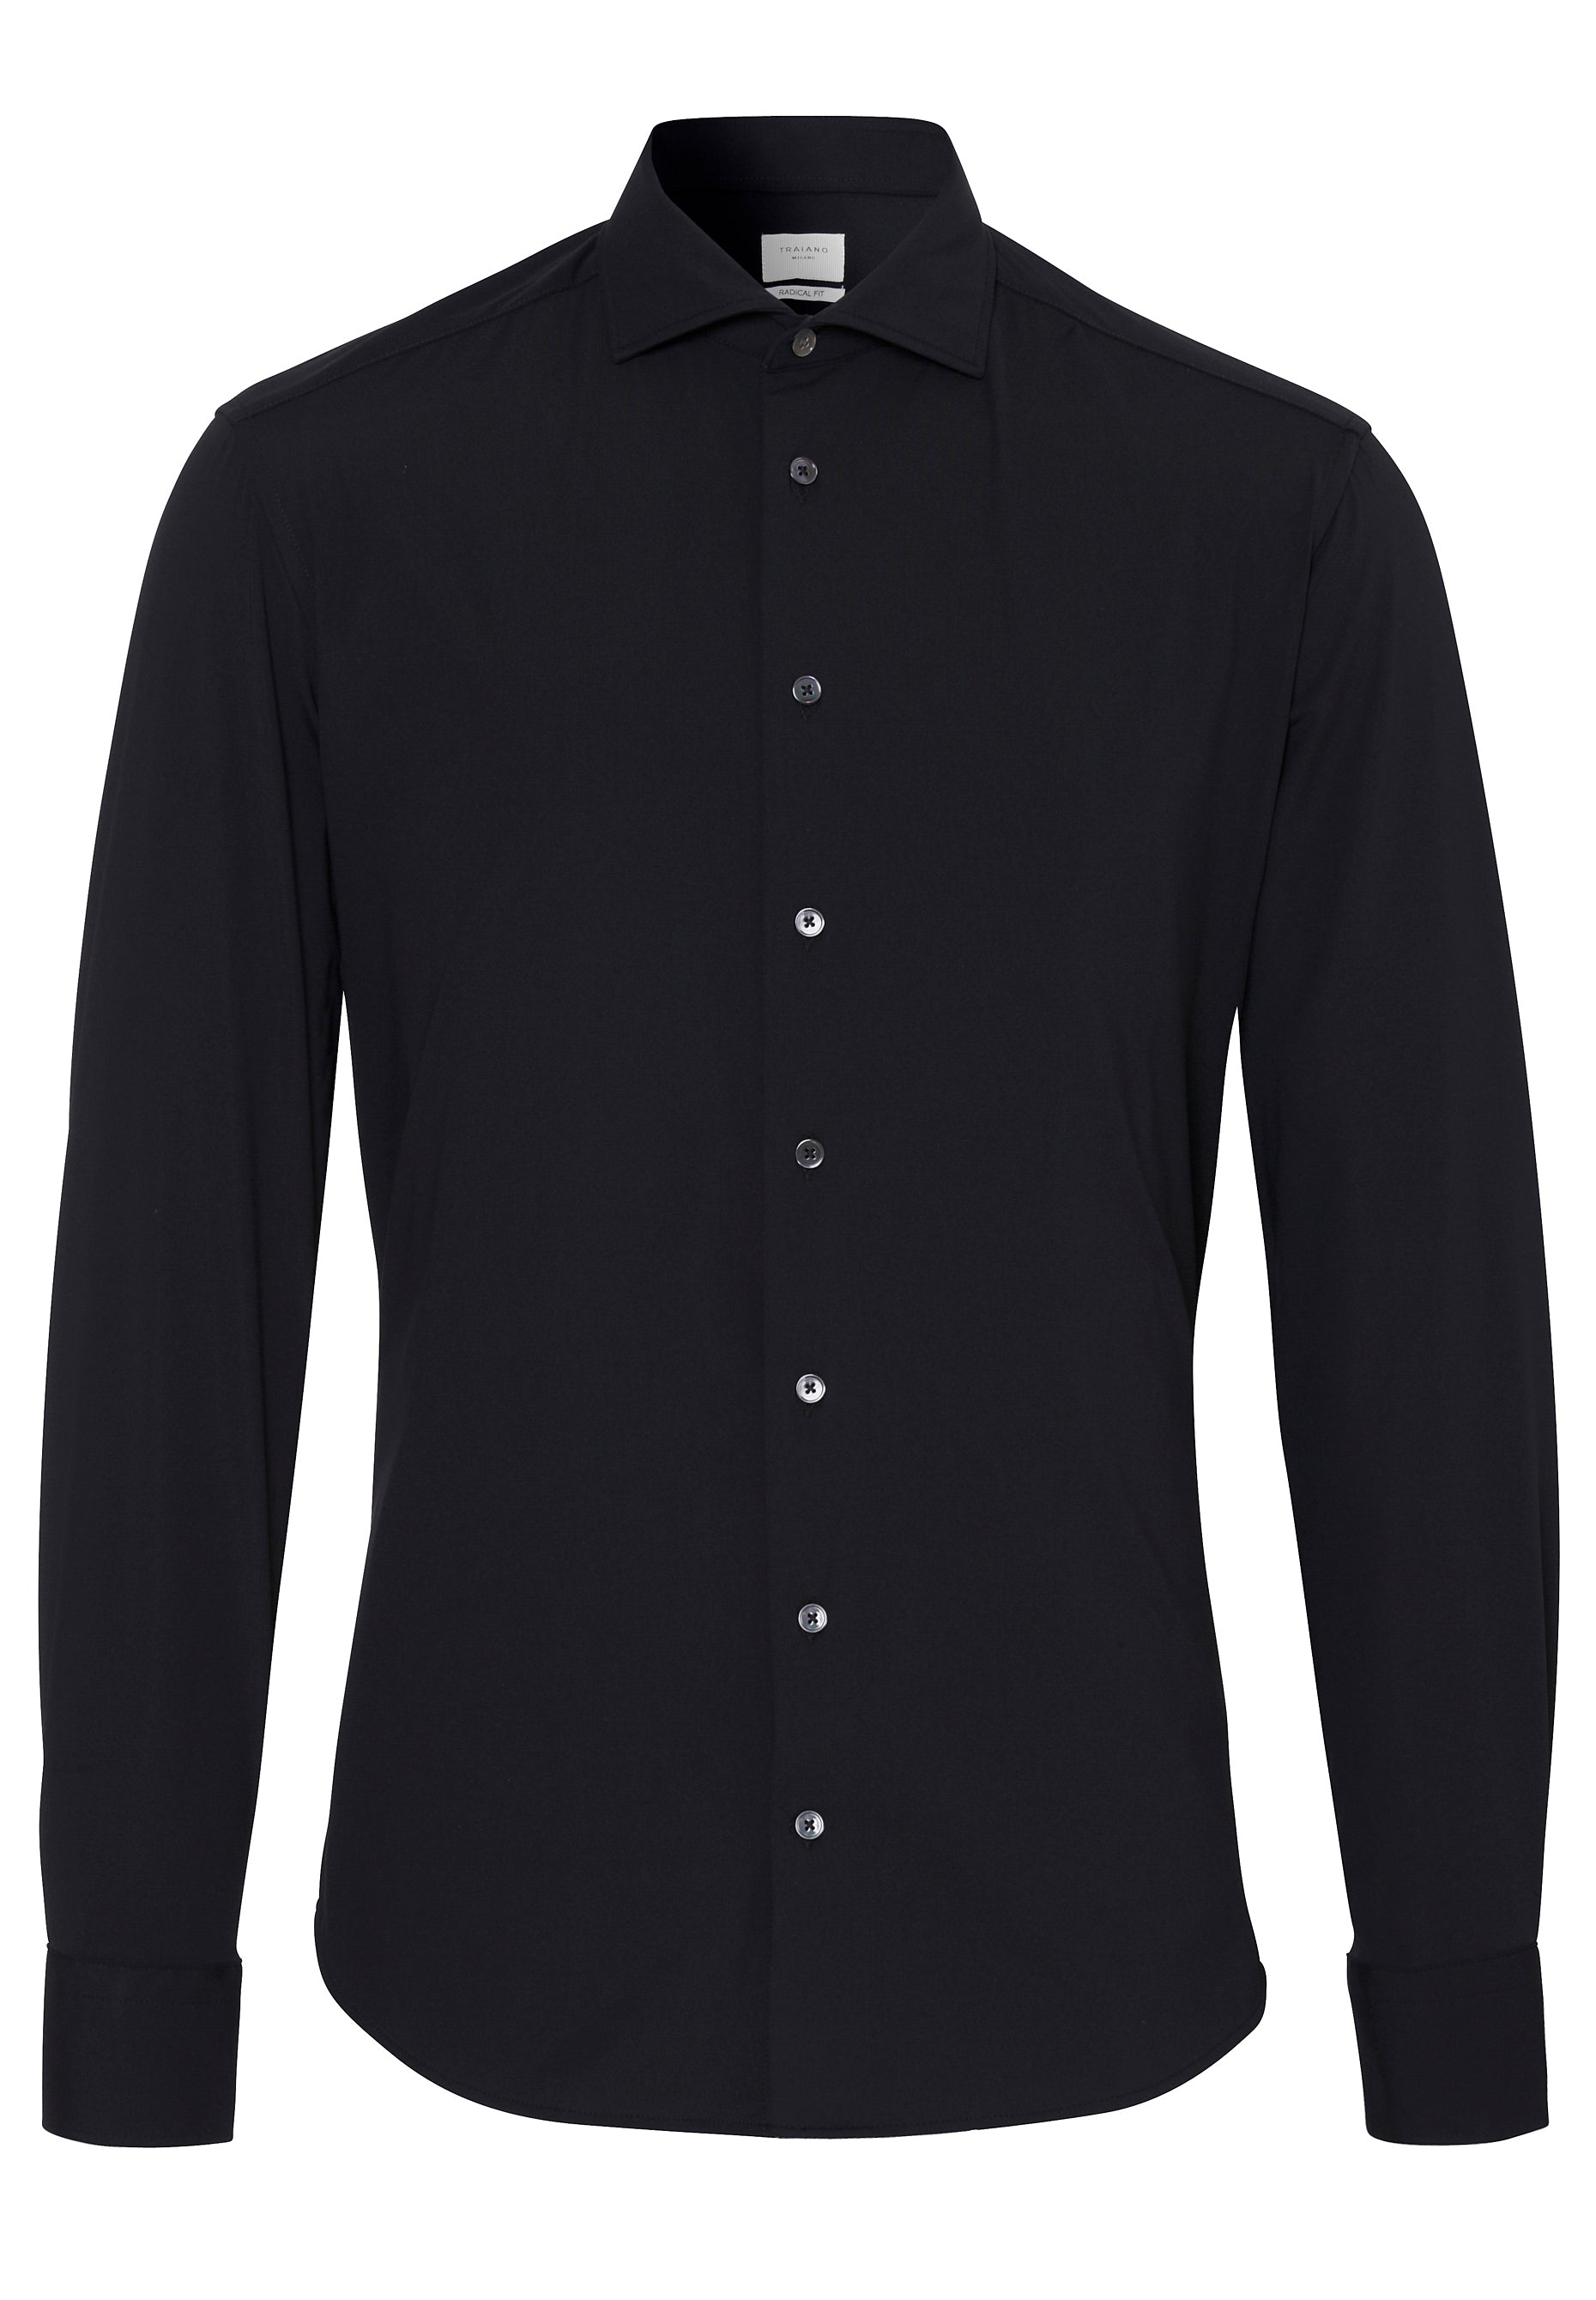 T1002-311 Traiano Rossini Radical Fit Shirt 001 black